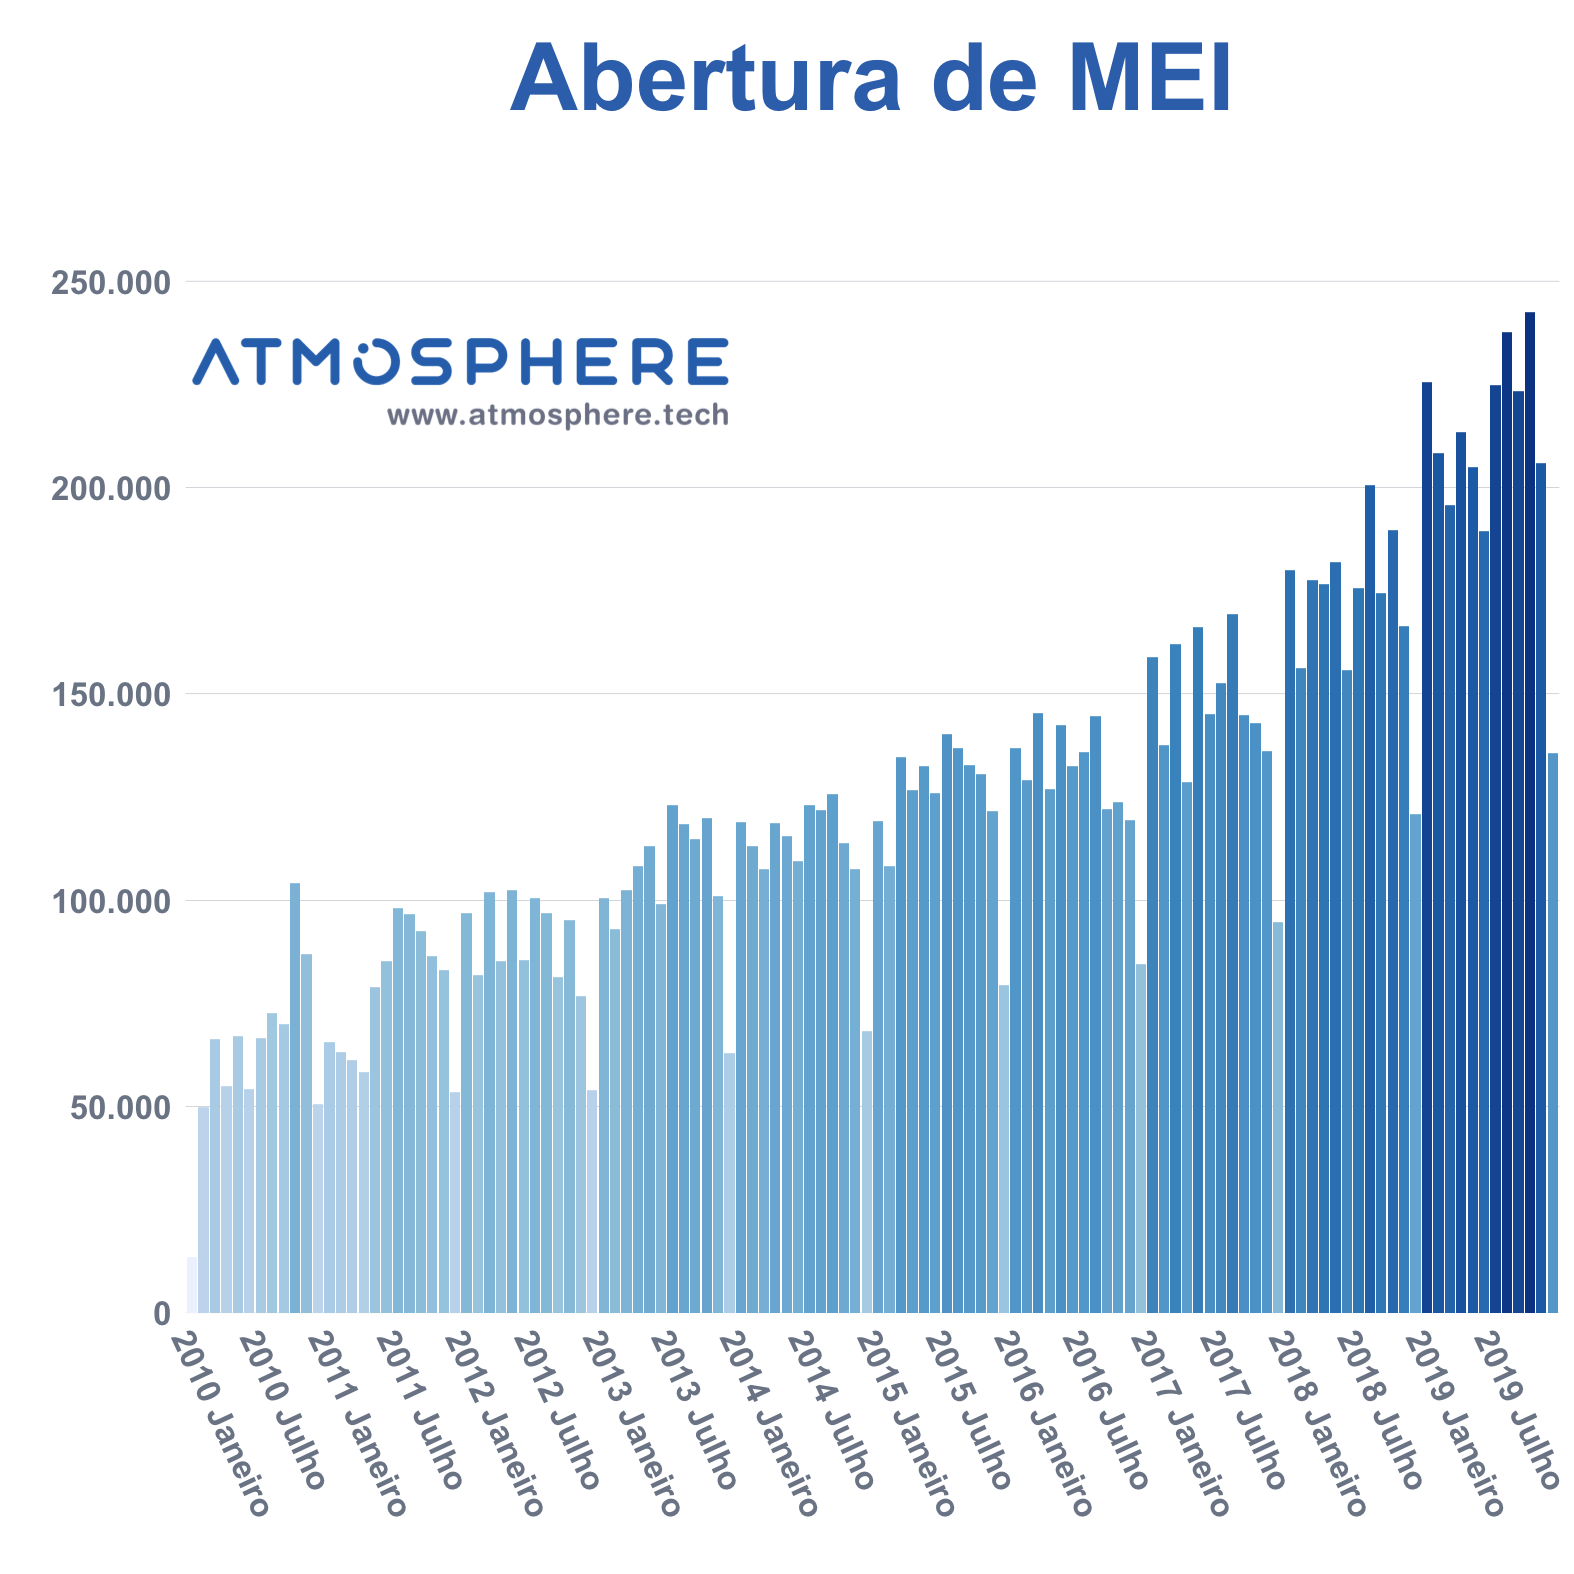 Atmosphere Abertura de MEI mês a mês desde 2009